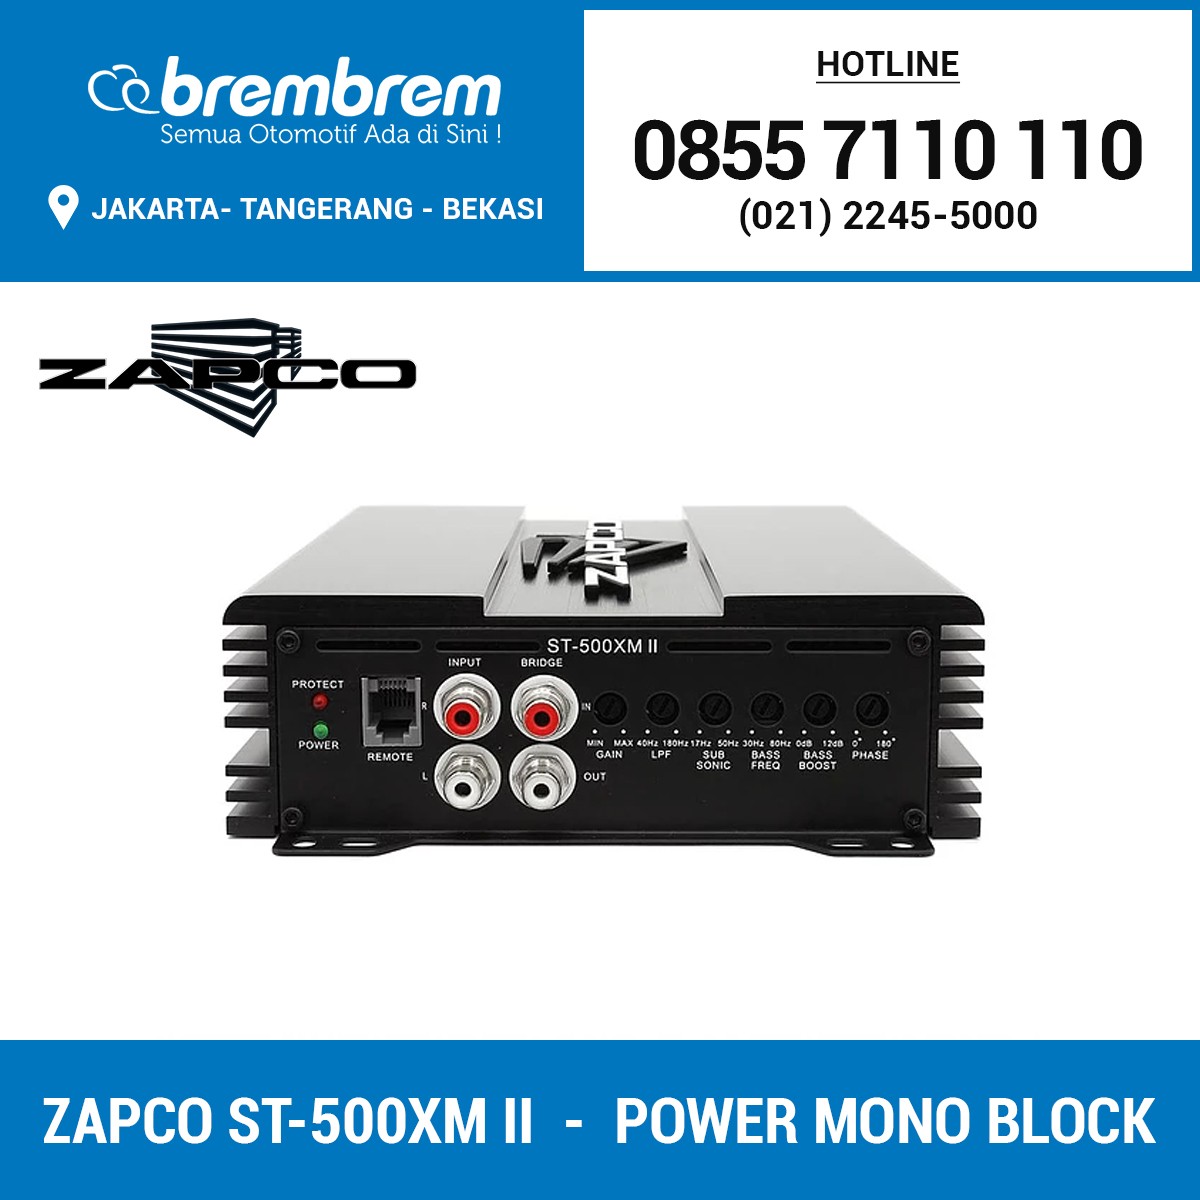 ZAPCO ST-500XM II - POWER MONOBLOCK